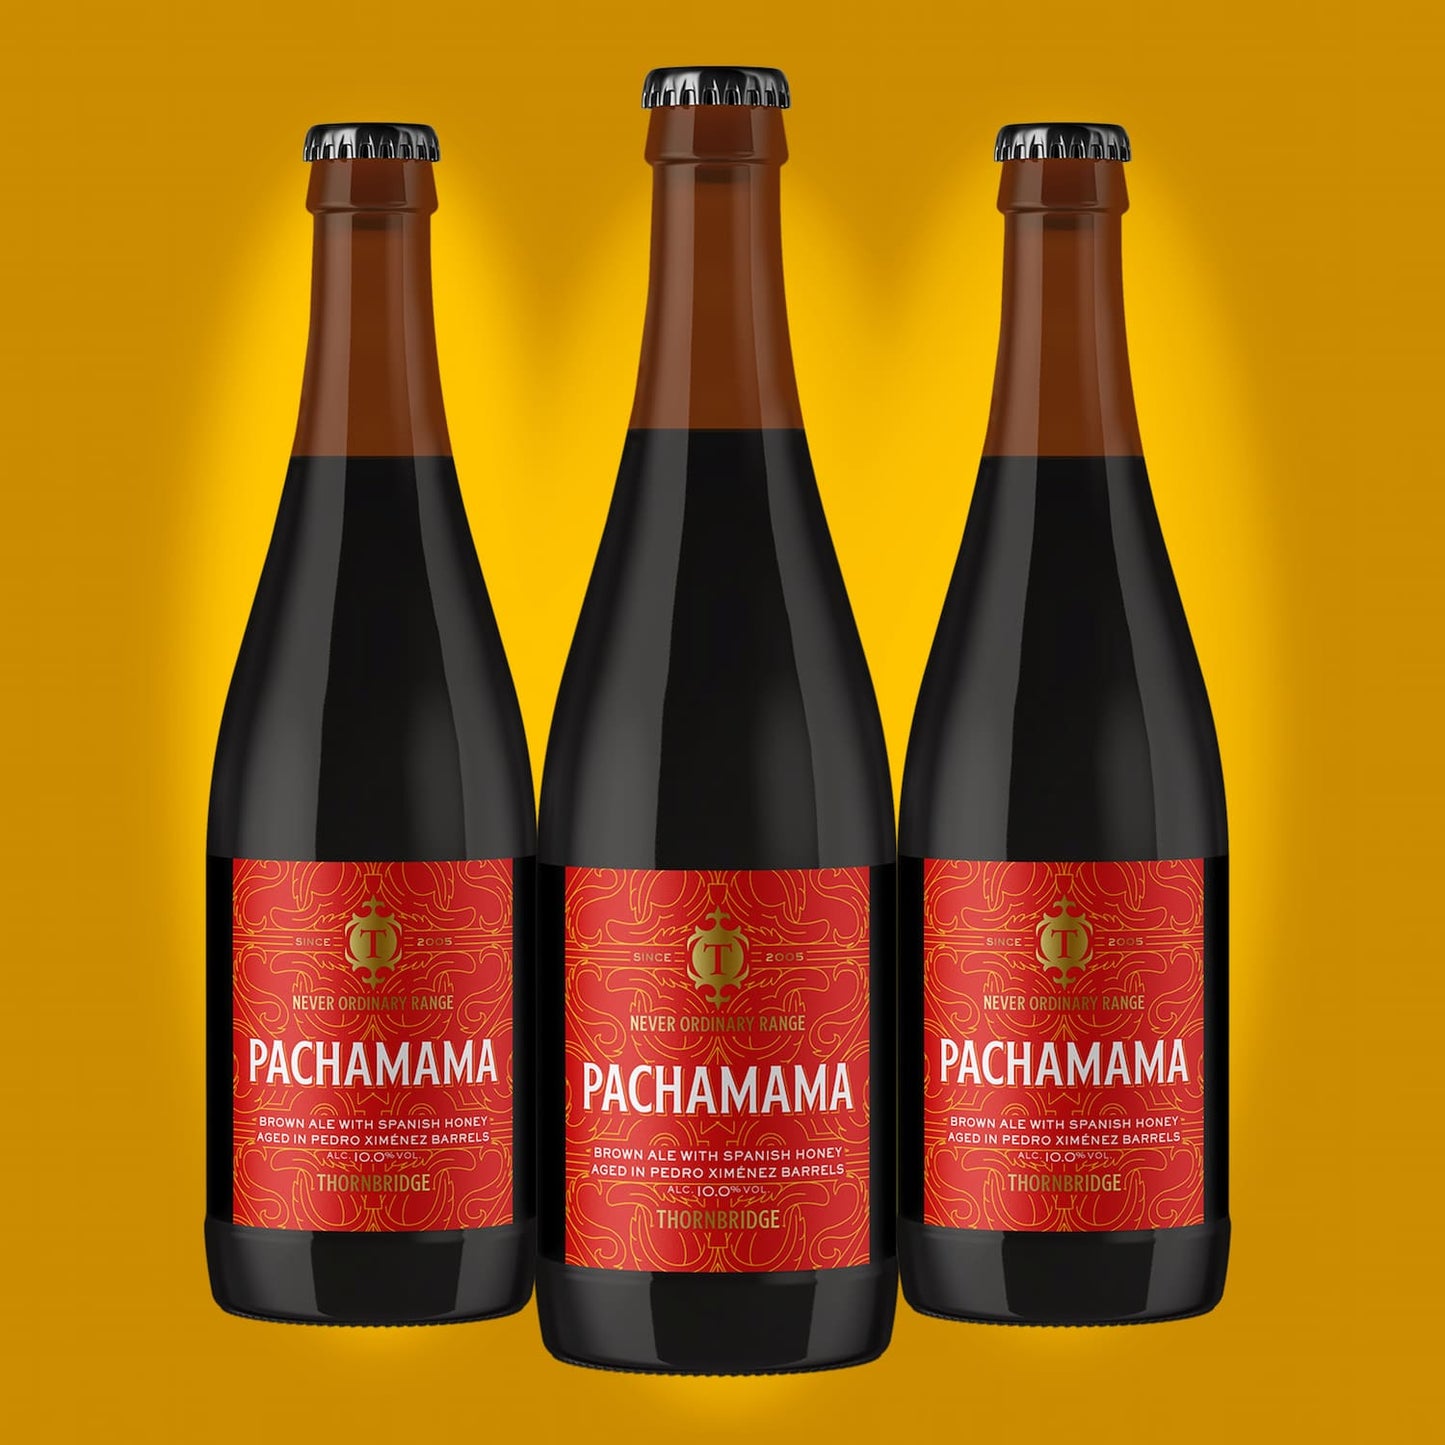 Pachamama, 10% ABV Pedro Ximénez Barrel Aged Brown Ale 12 x 375ml bottles Beer - BA mini case Thornbridge